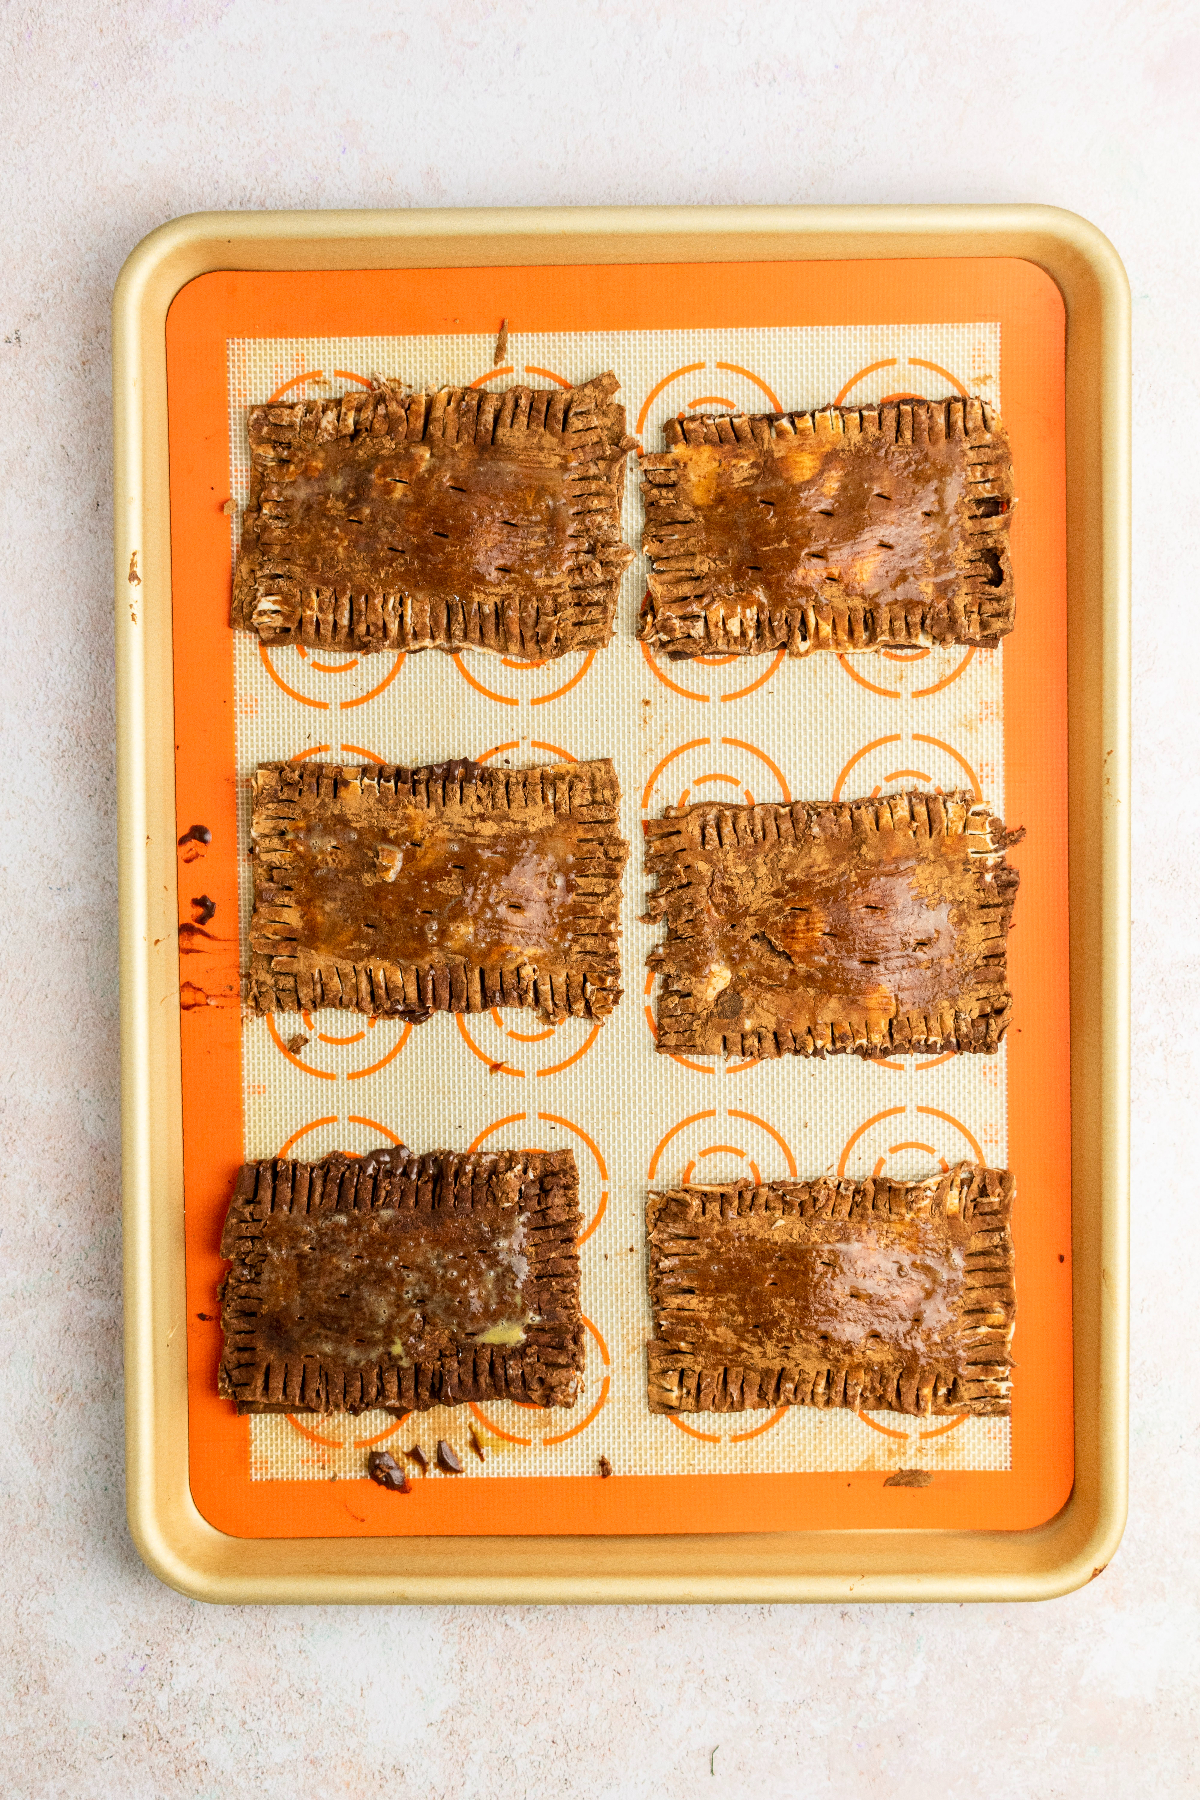 Six pop tarts sealed on a baking sheet.